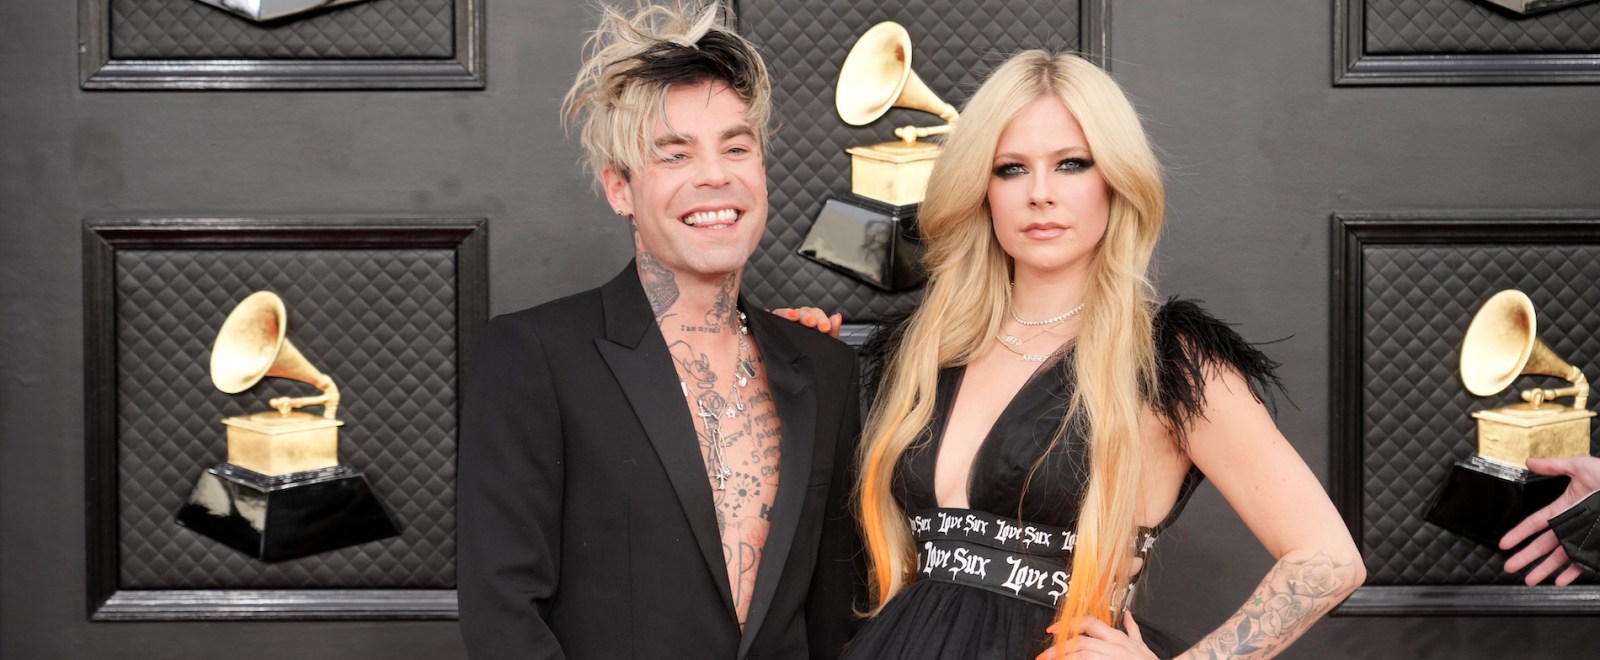 Mod Sun Avril Lavigne 64th Annual Grammy Awards 2022